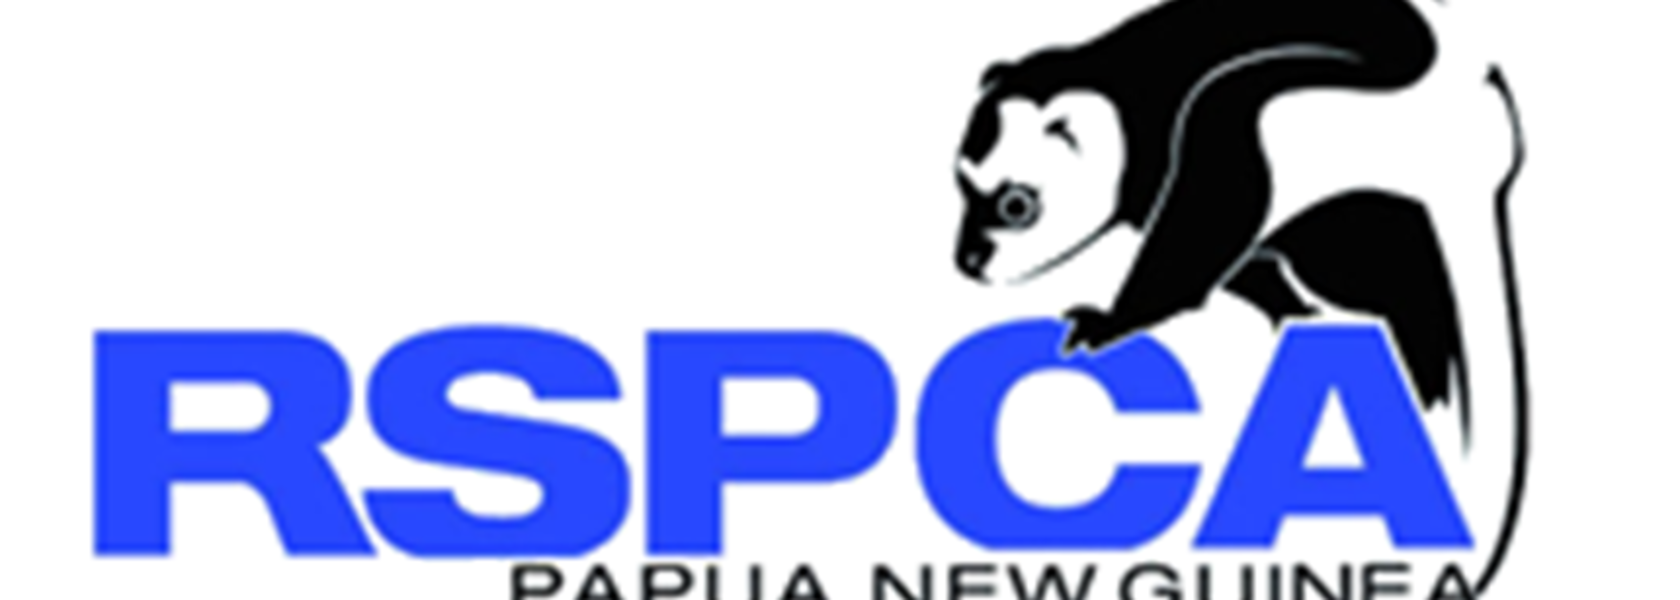 Pet Insurance By Rspca Pet In